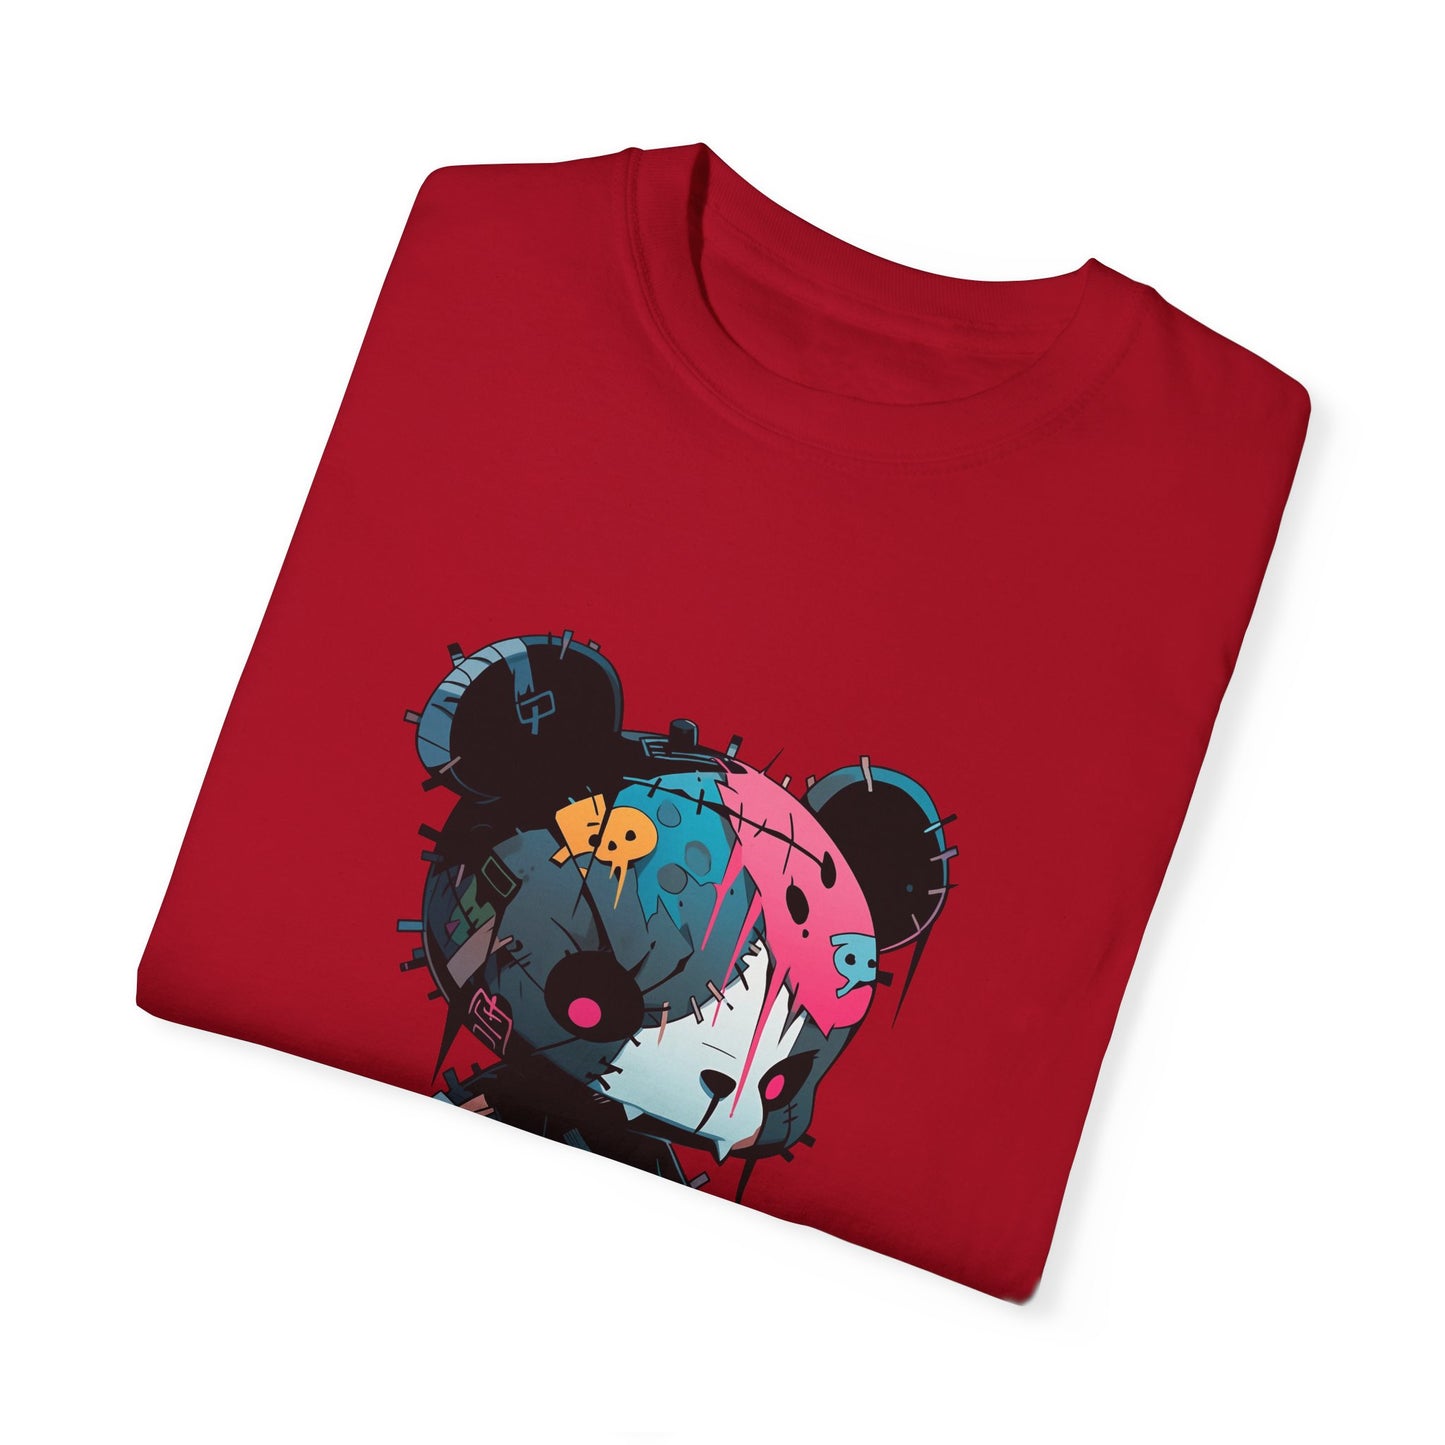 Hip Hop Teddy Bear Graphic Unisex Garment-dyed T-shirt Cotton Funny Humorous Graphic Soft Premium Unisex Men Women Red T-shirt Birthday Gift-23